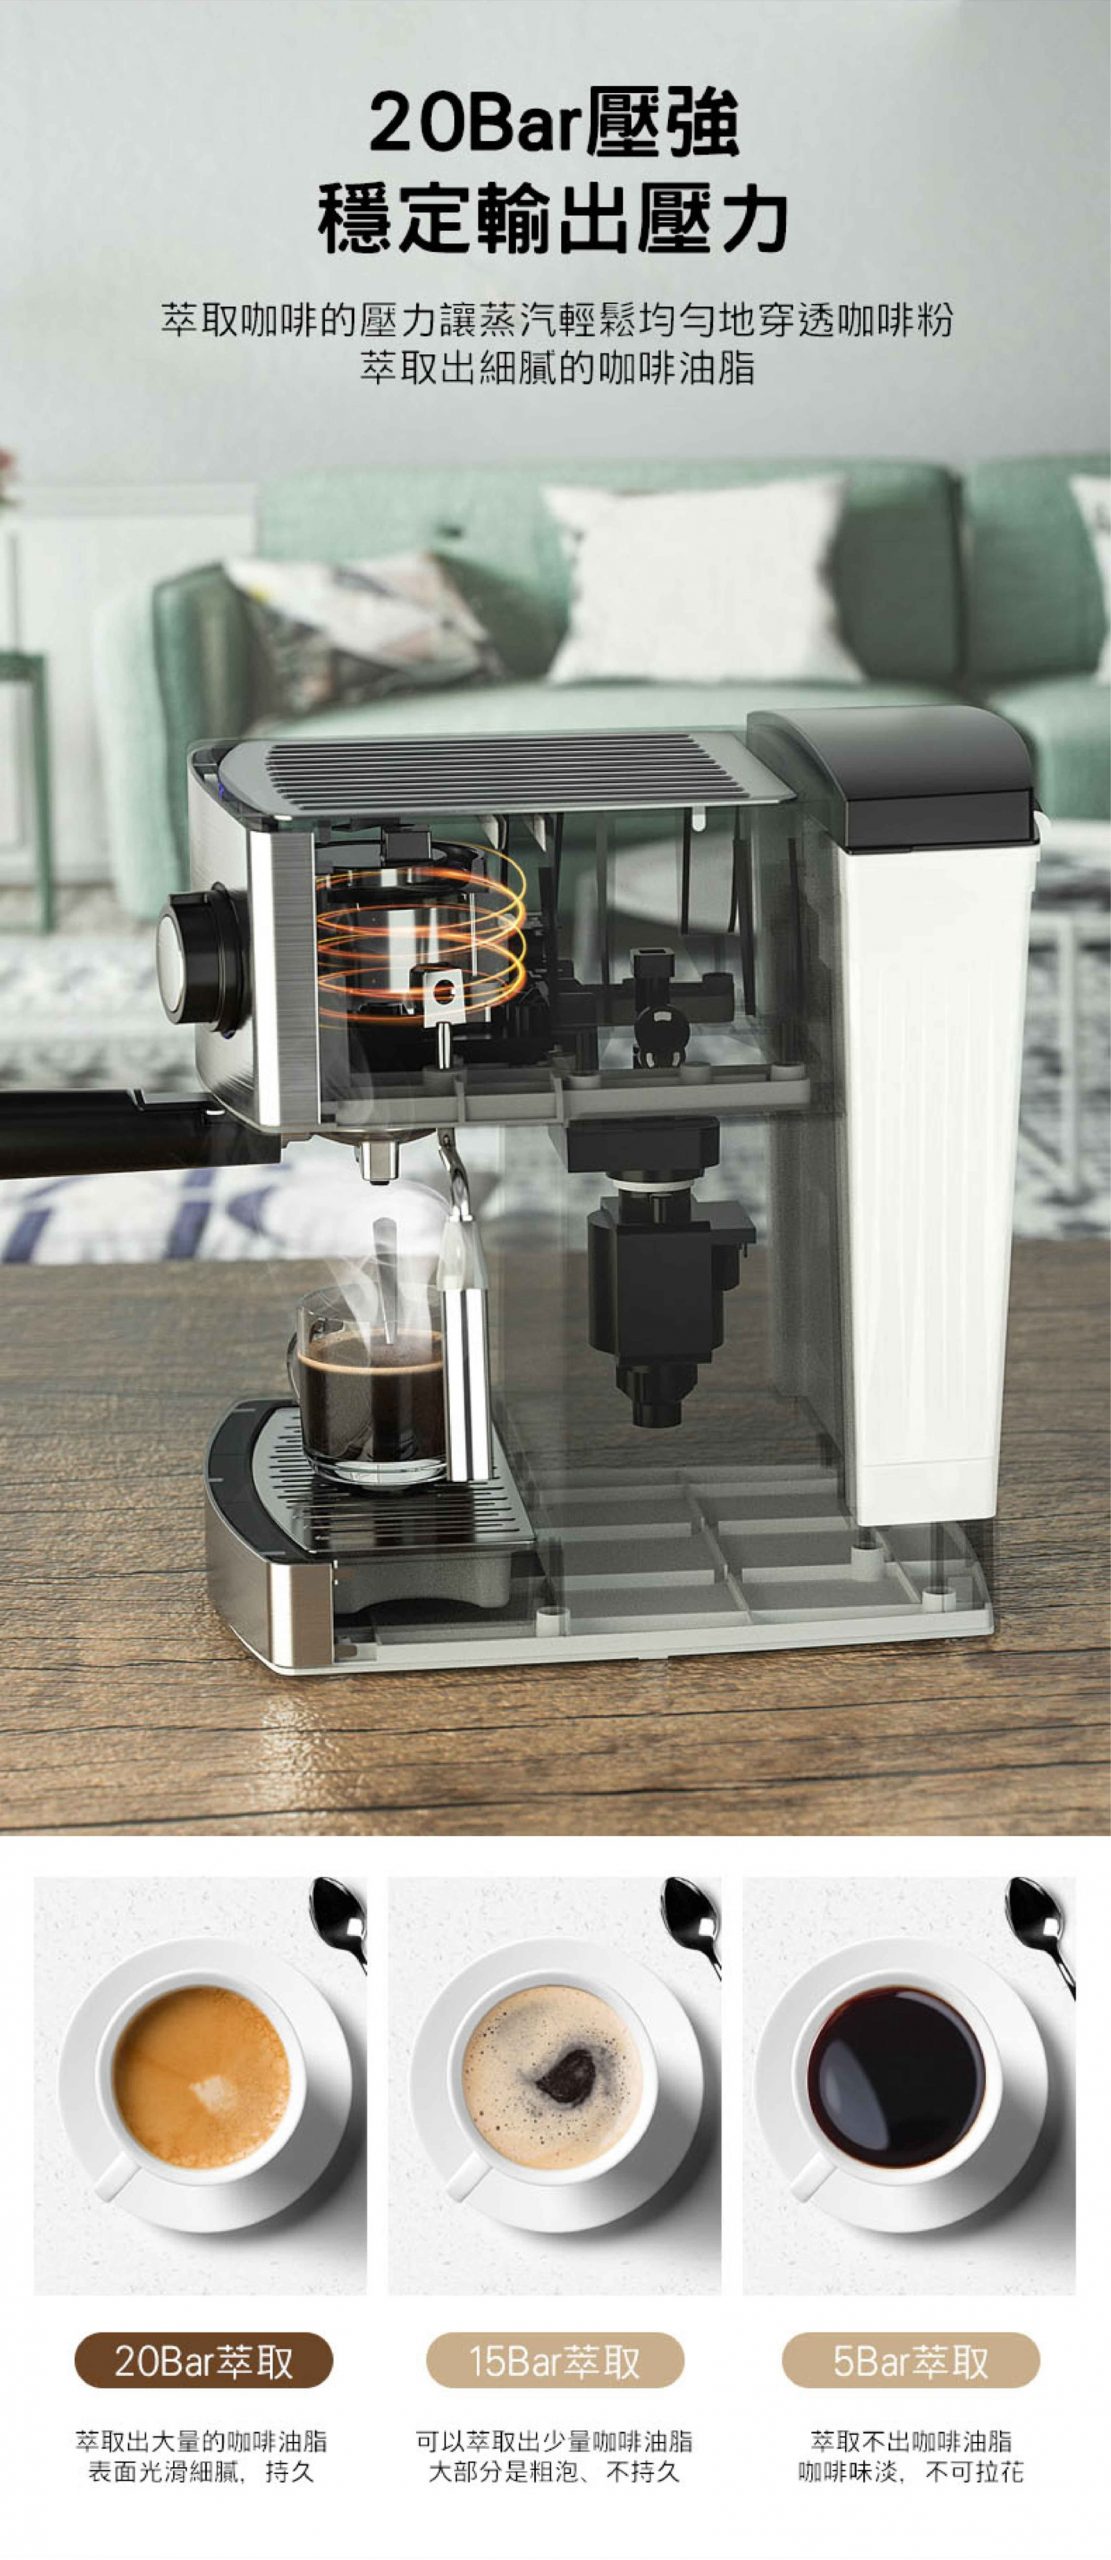 【Osner韓國歐紳】YIRGA 半自動義式咖啡機推薦2021（適用Nespresso膠囊）｜ELCONA韓國經典電動咖啡磨豆機 @GINA環球旅行生活